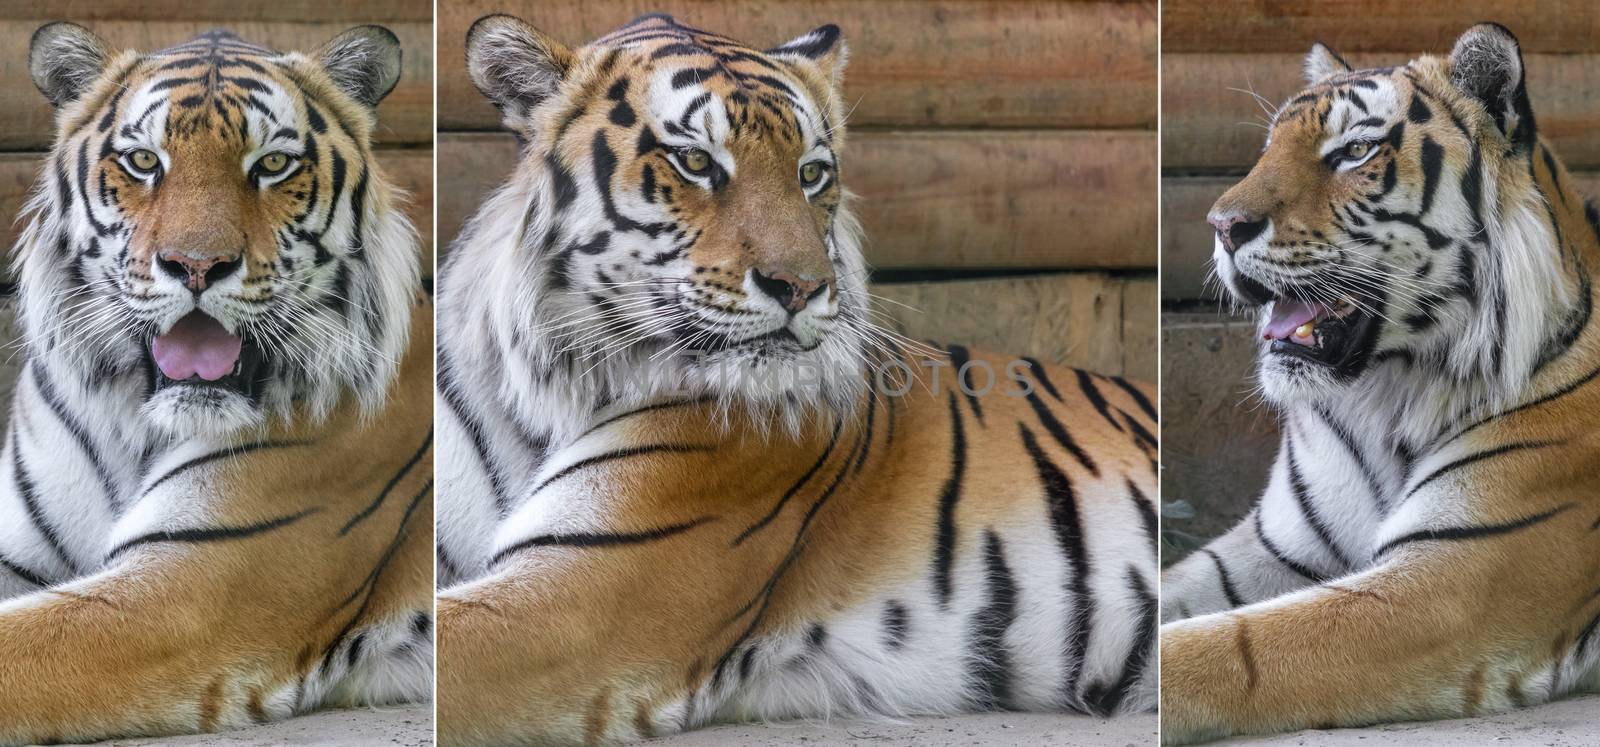 collage of three photos, animal Amur tigers